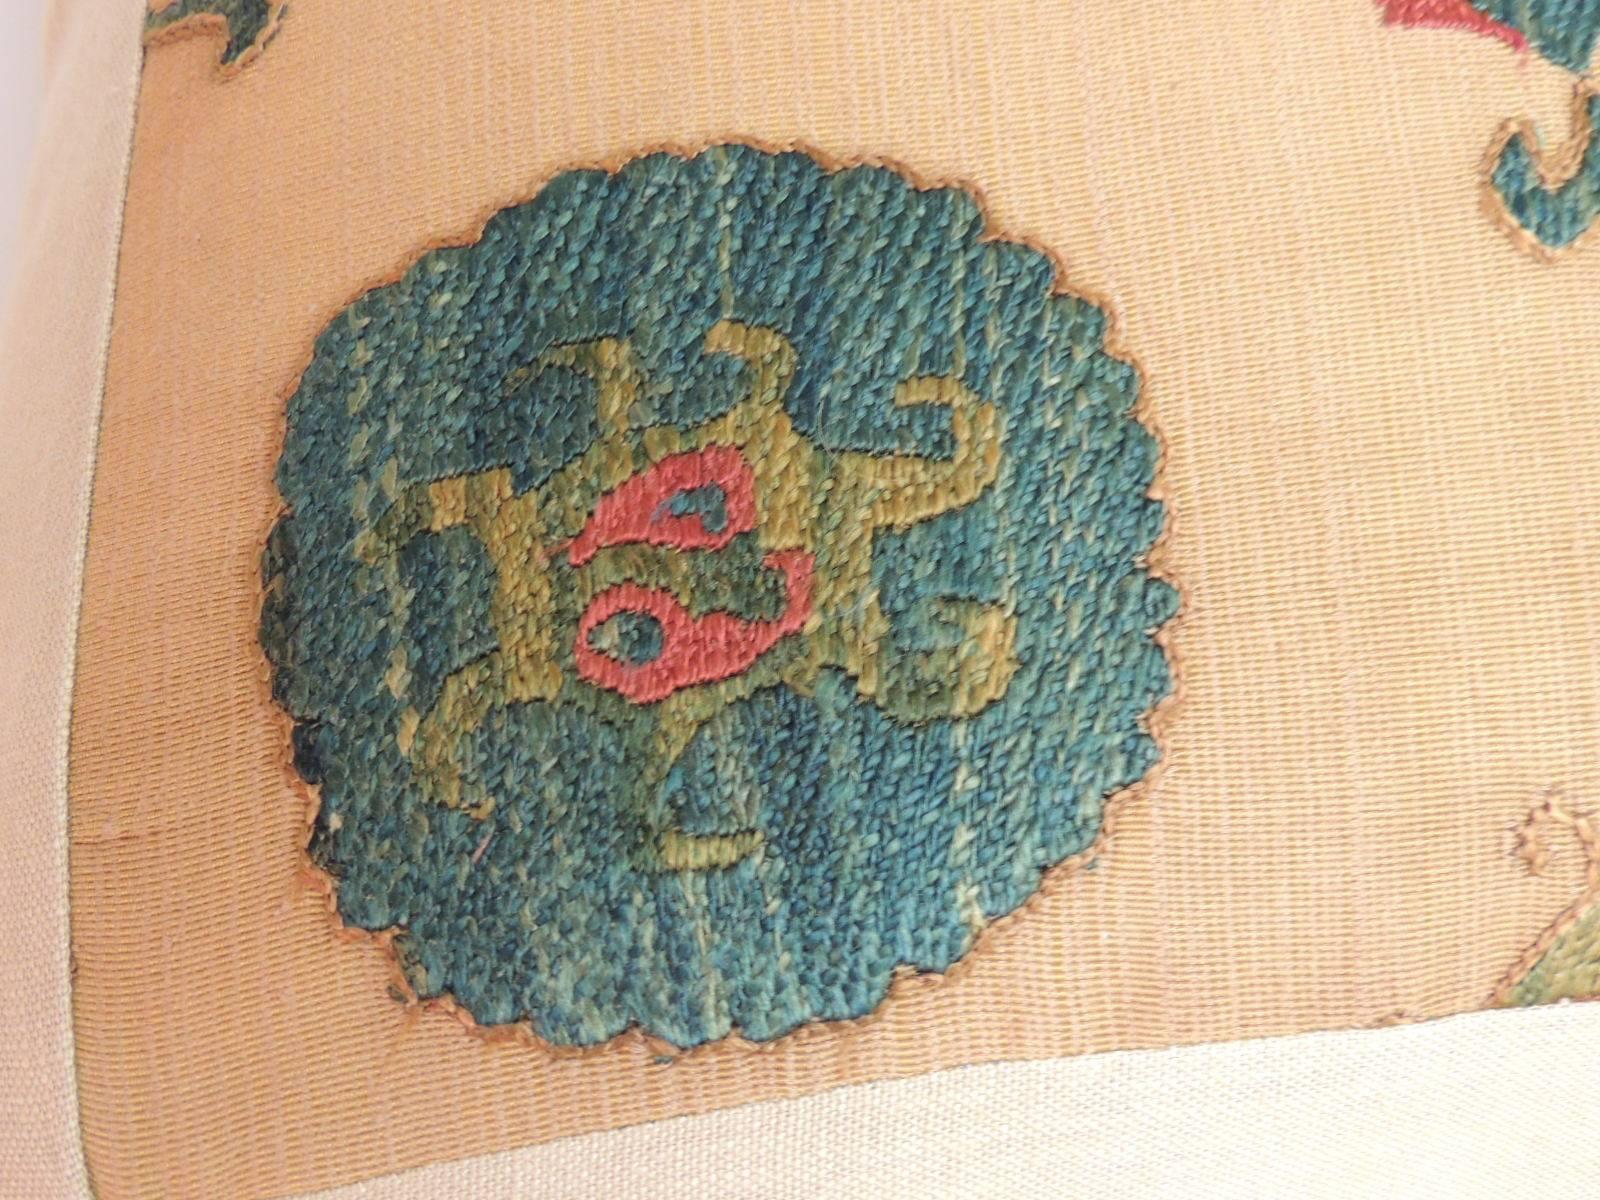 Uzbek Antique Embroidery Suzani Tribal Boho-Chic Decorative Pillow